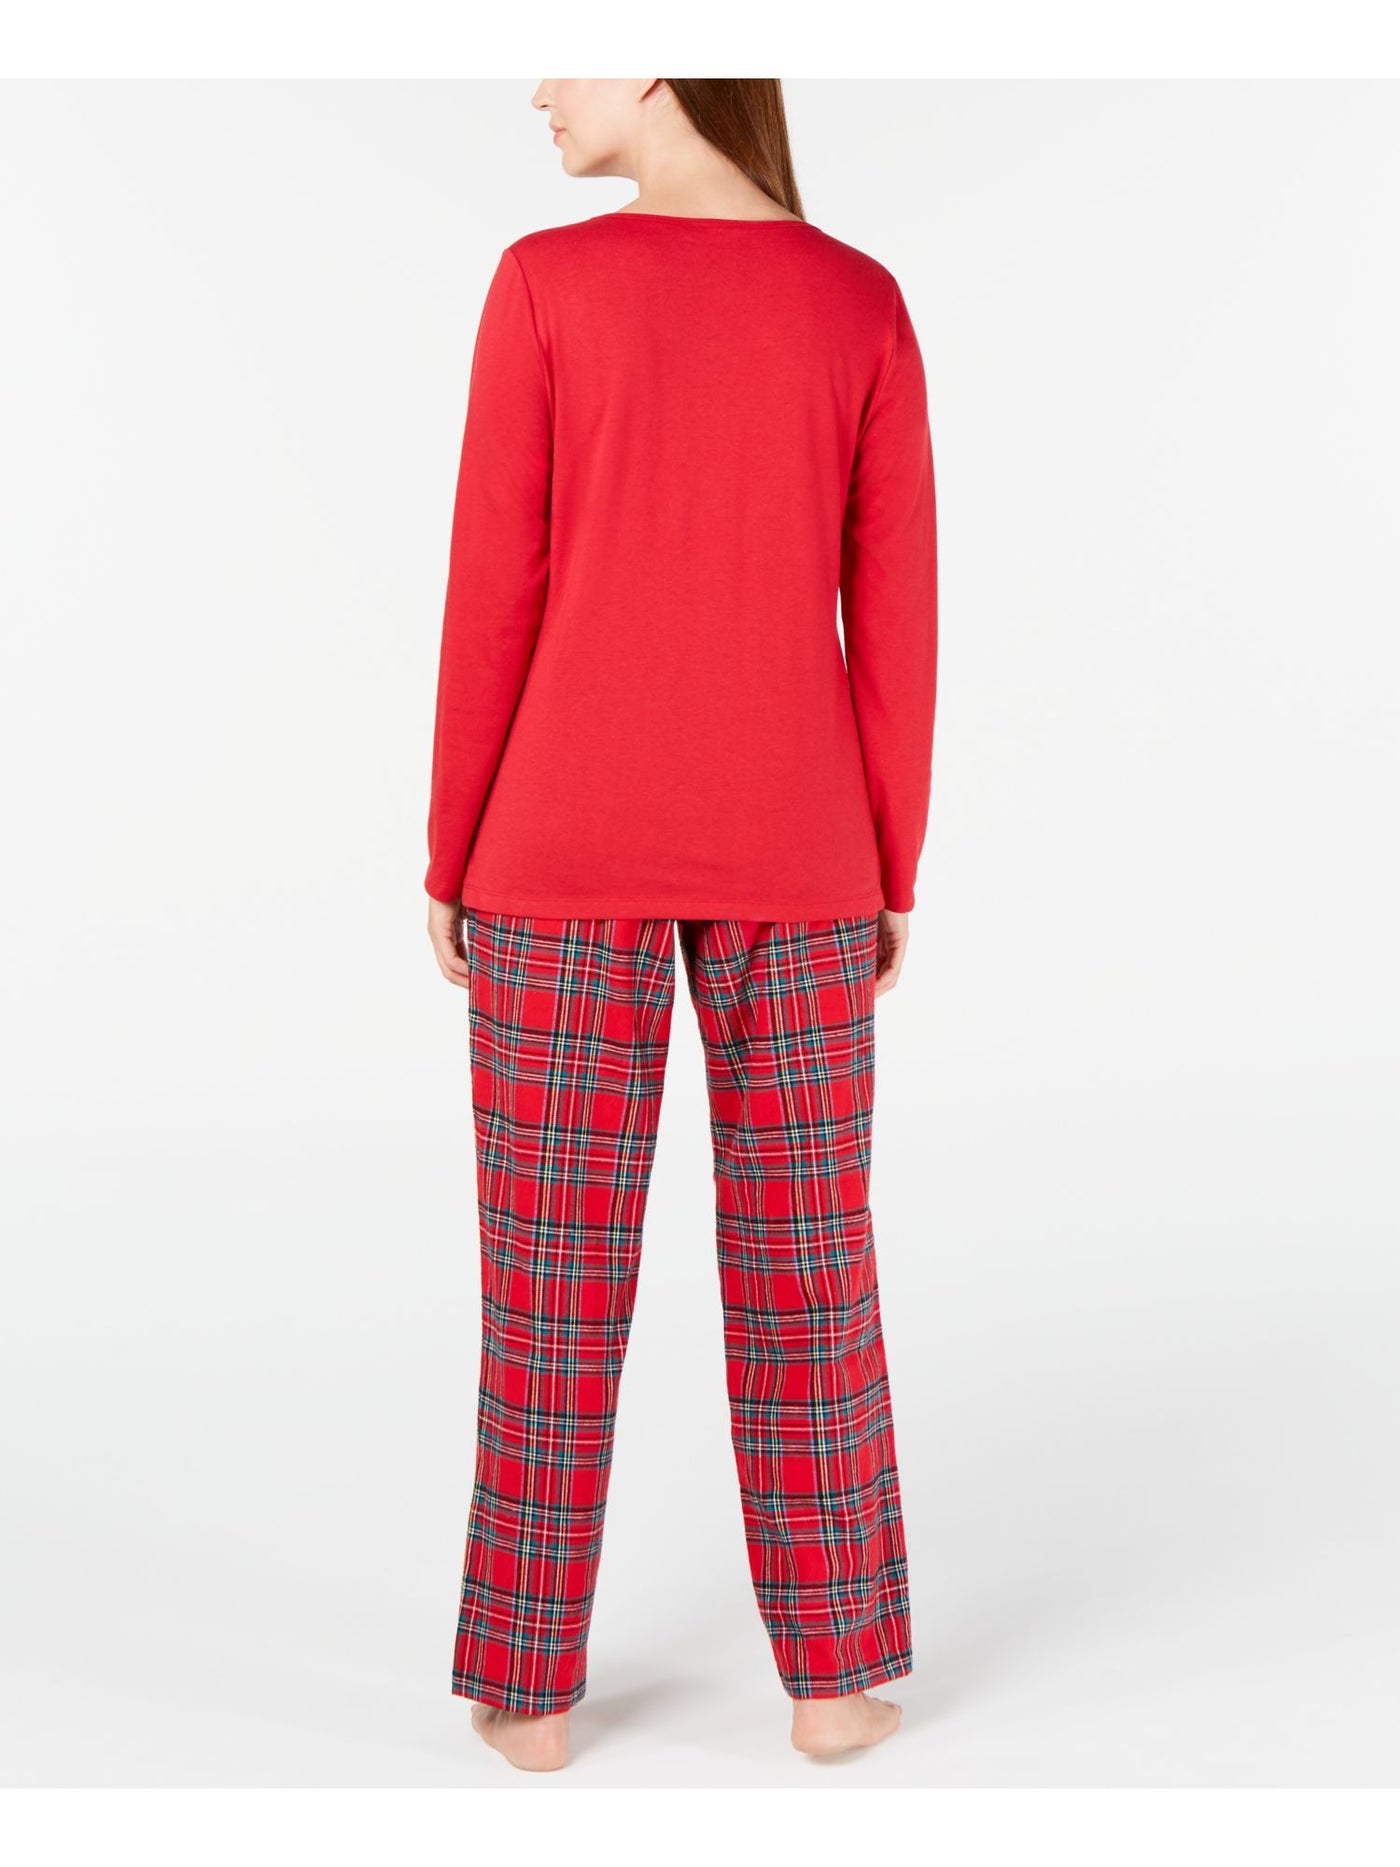 FAMILY PJs Womens Mix It Red Elastic Band Long Sleeve T-Shirt Top Straight leg Pants Knit Pajamas XXL